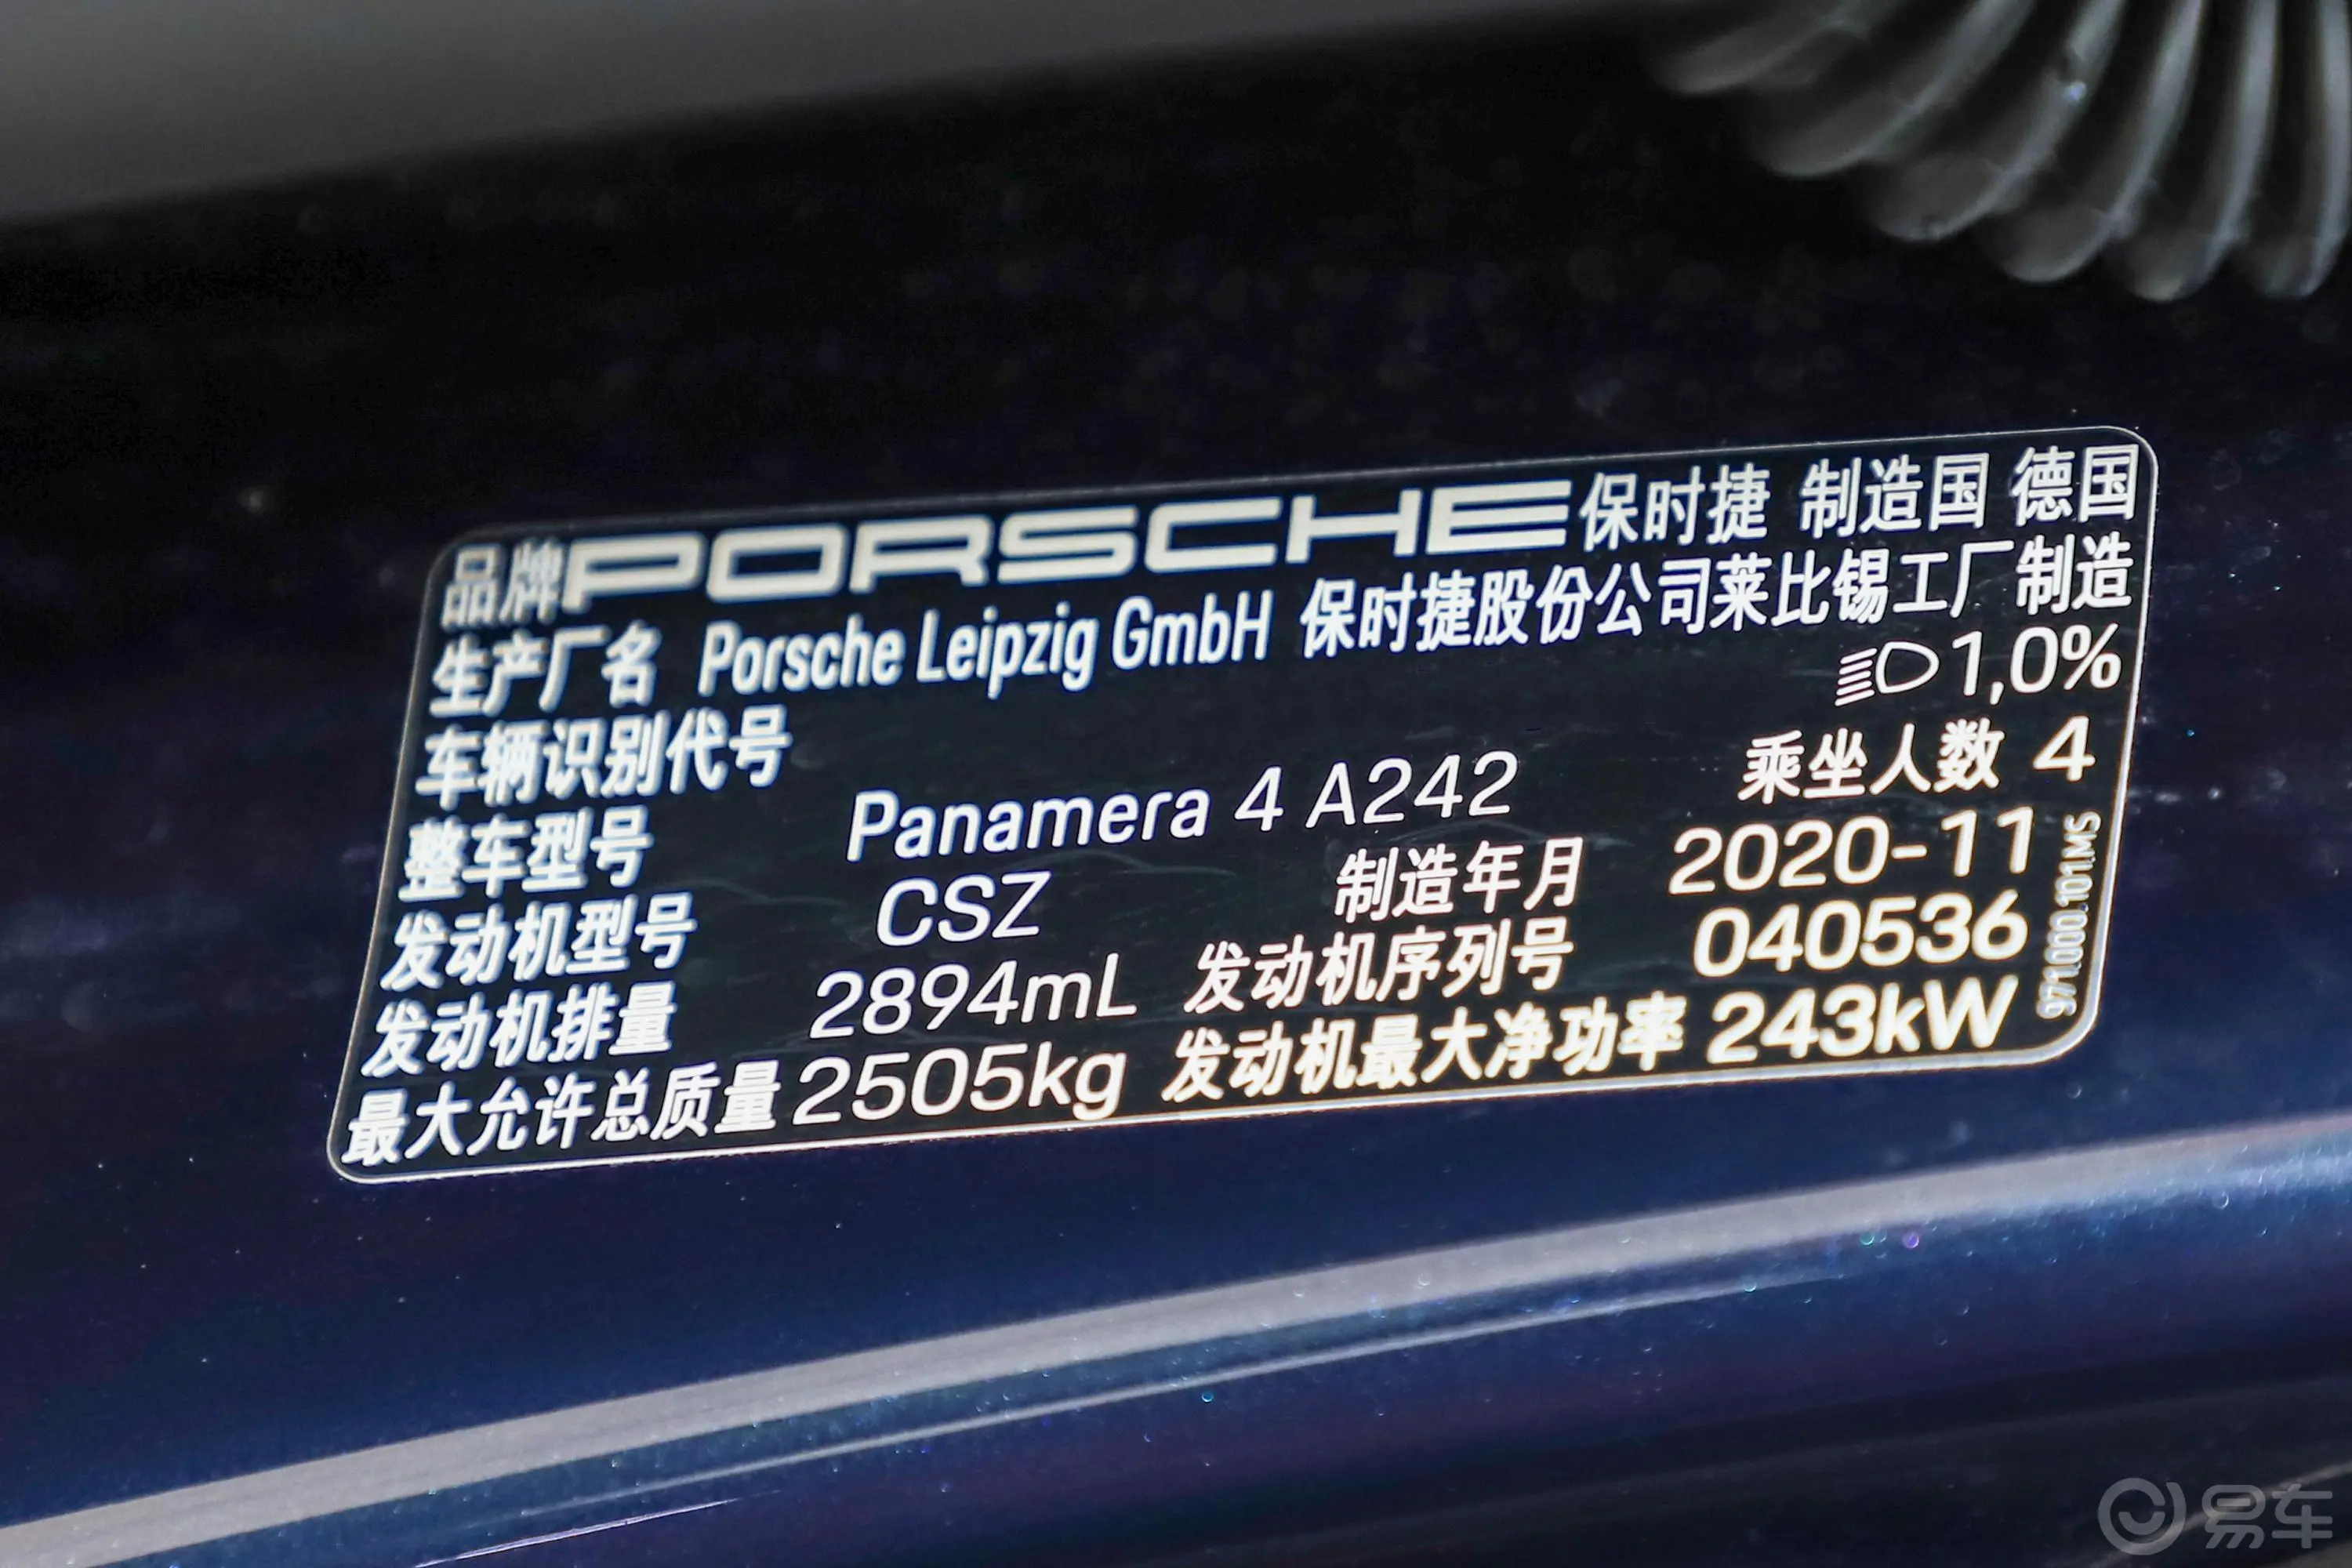 PanameraPanamera 4 行政加长版 2.9T外观